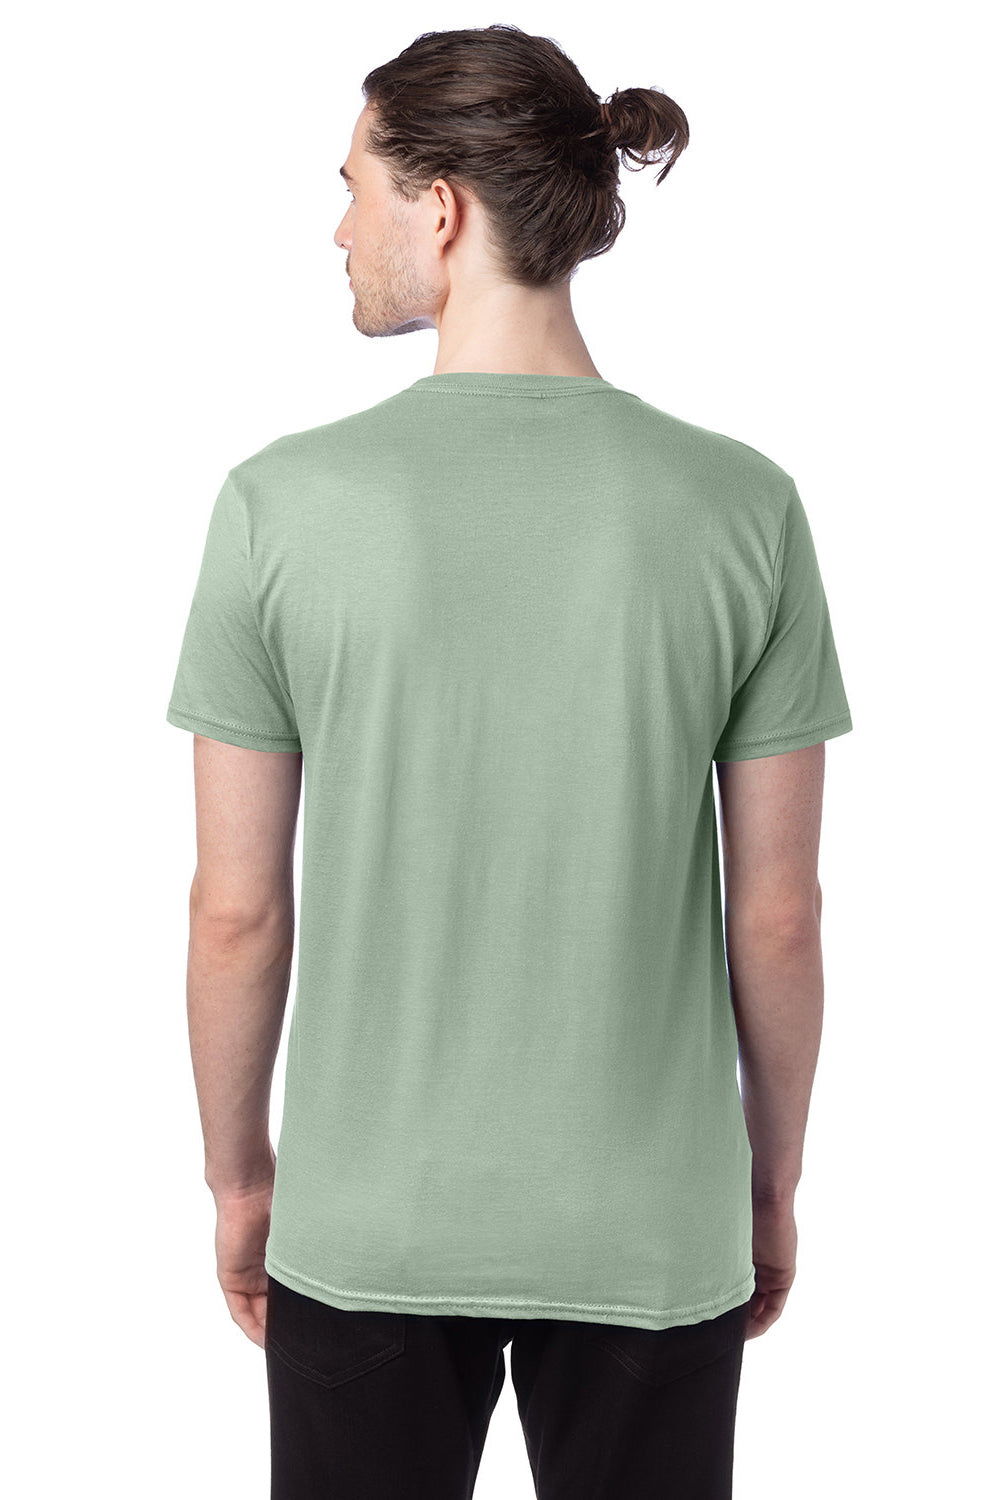 Hanes 4980 Mens Nano-T Short Sleeve Crewneck T-Shirt Equilibrium Green Back